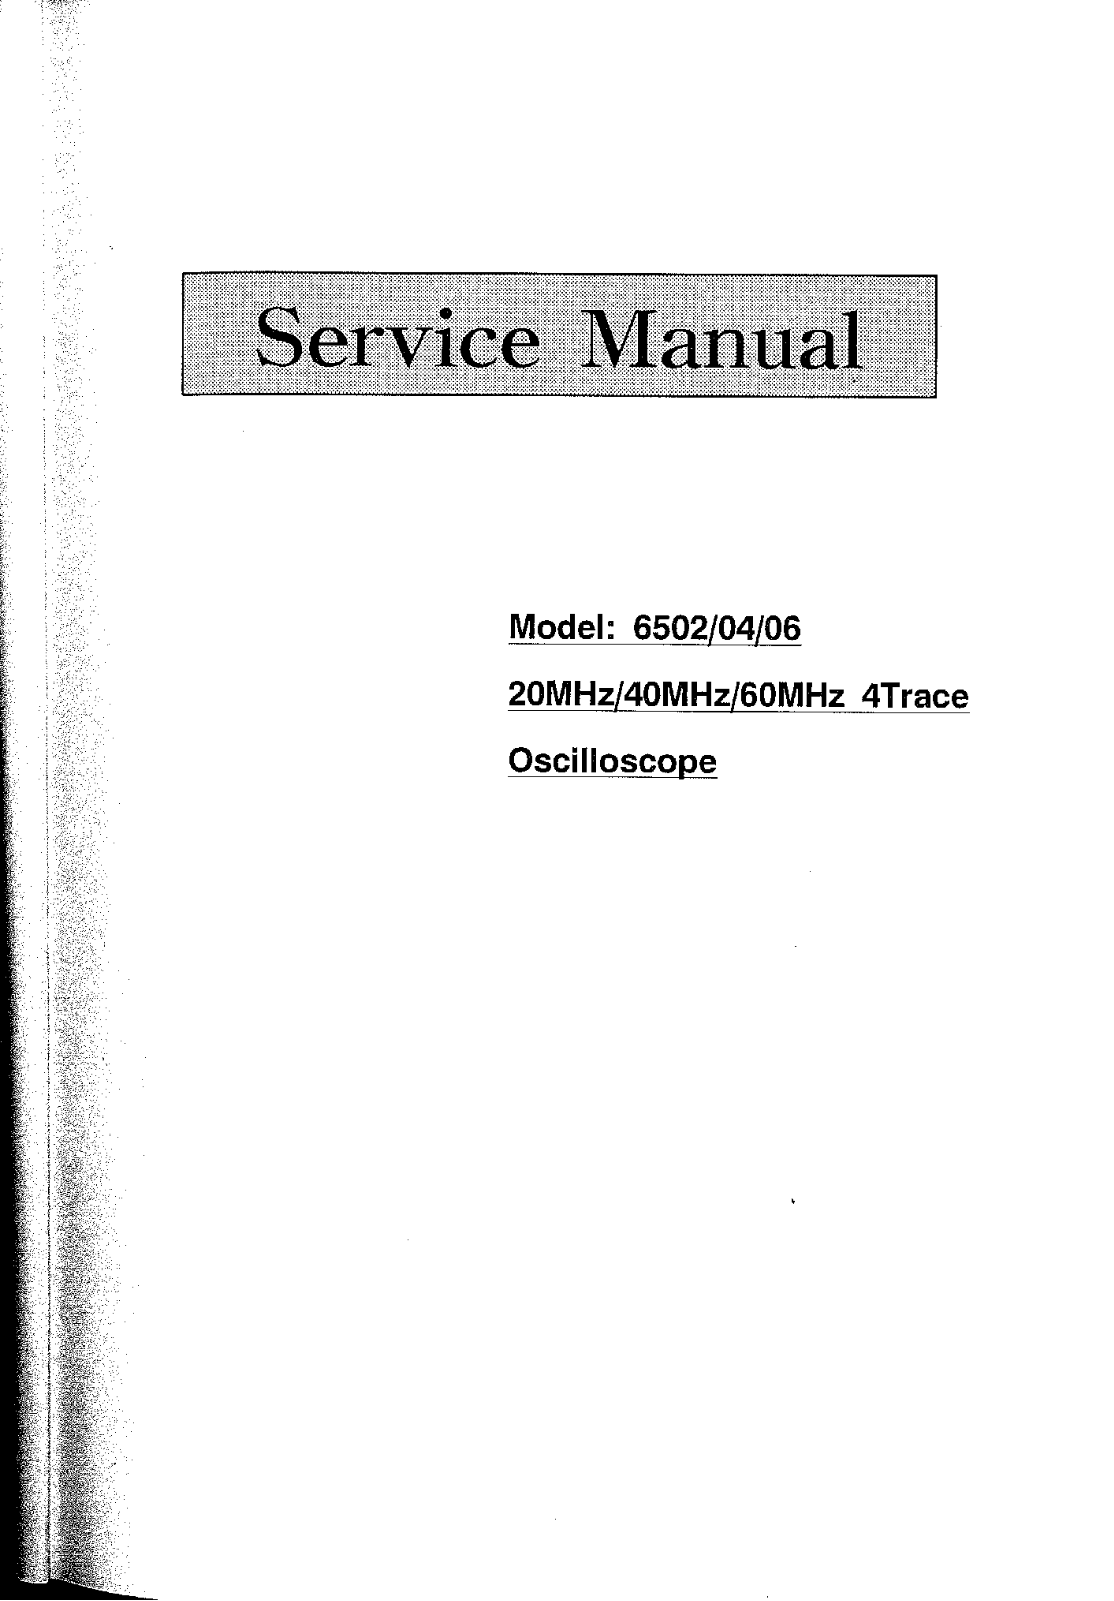 Protek 6506, 6504, 6502 Service Manual